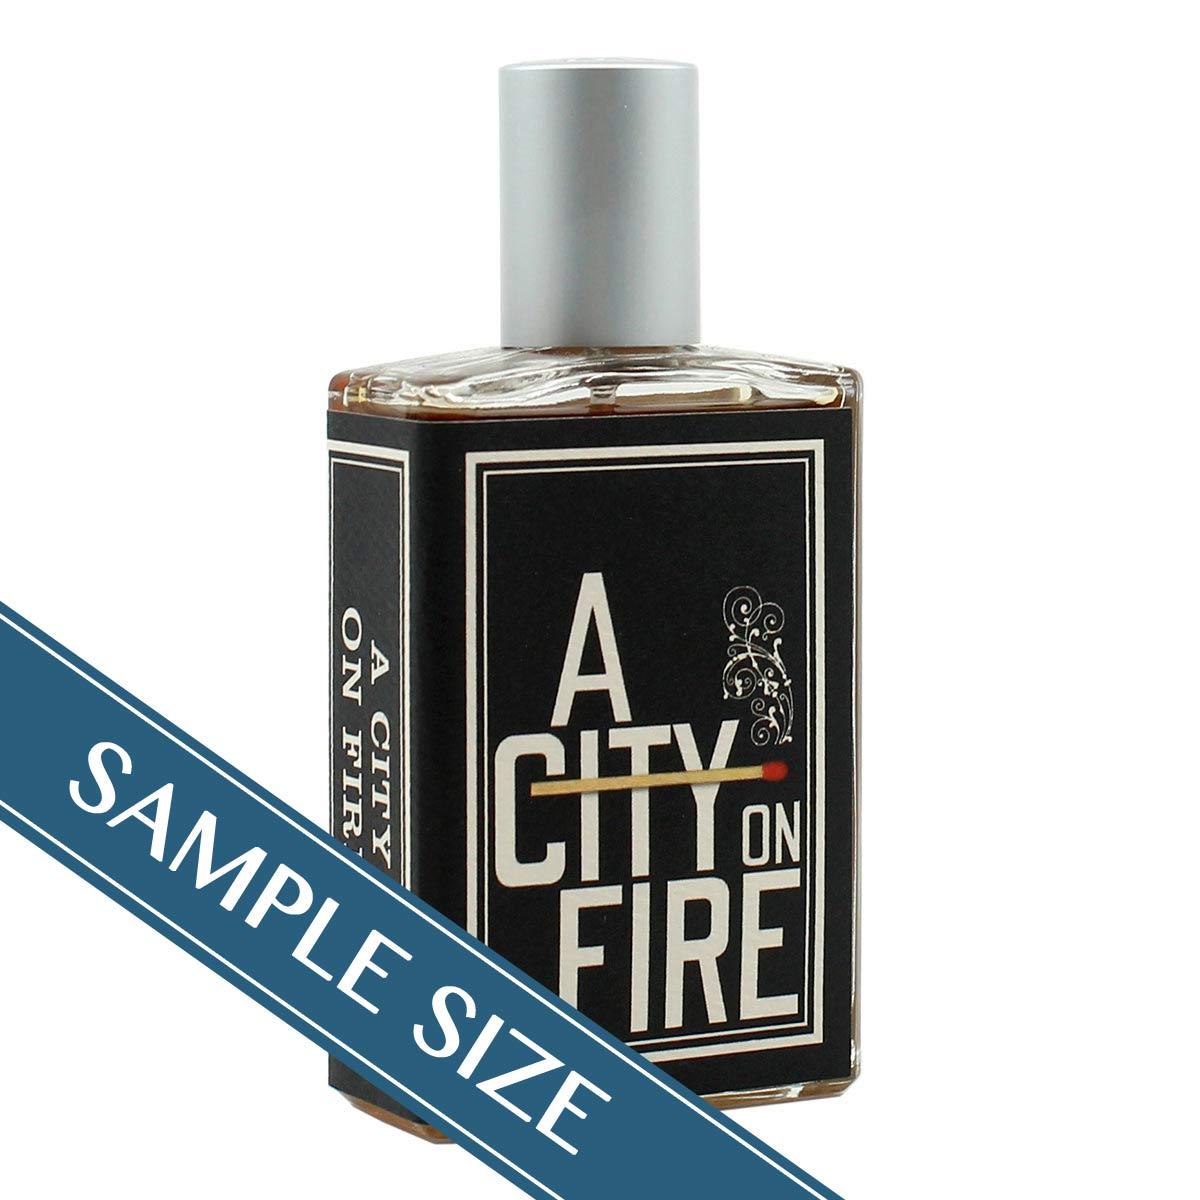 Primary image of Sample - A City on Fire Eau de Parfum